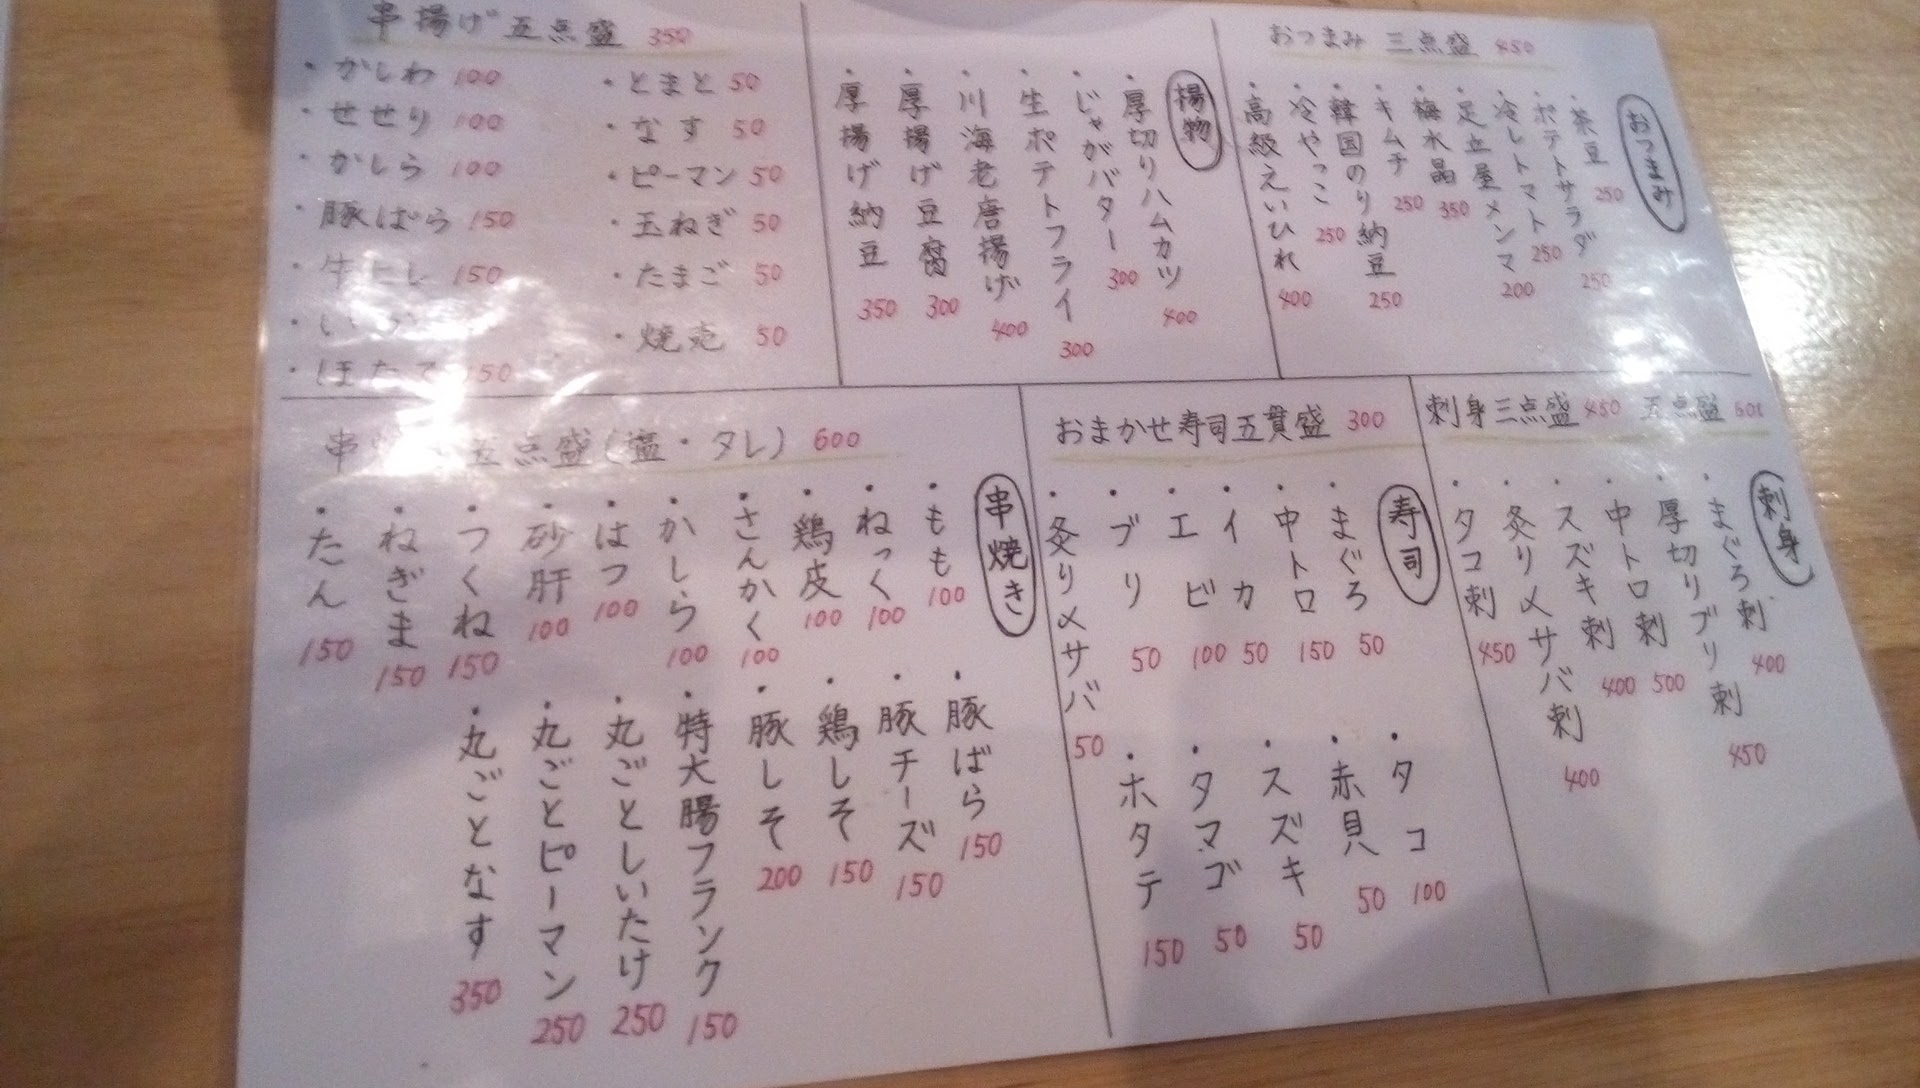 The food menu of Adachiya